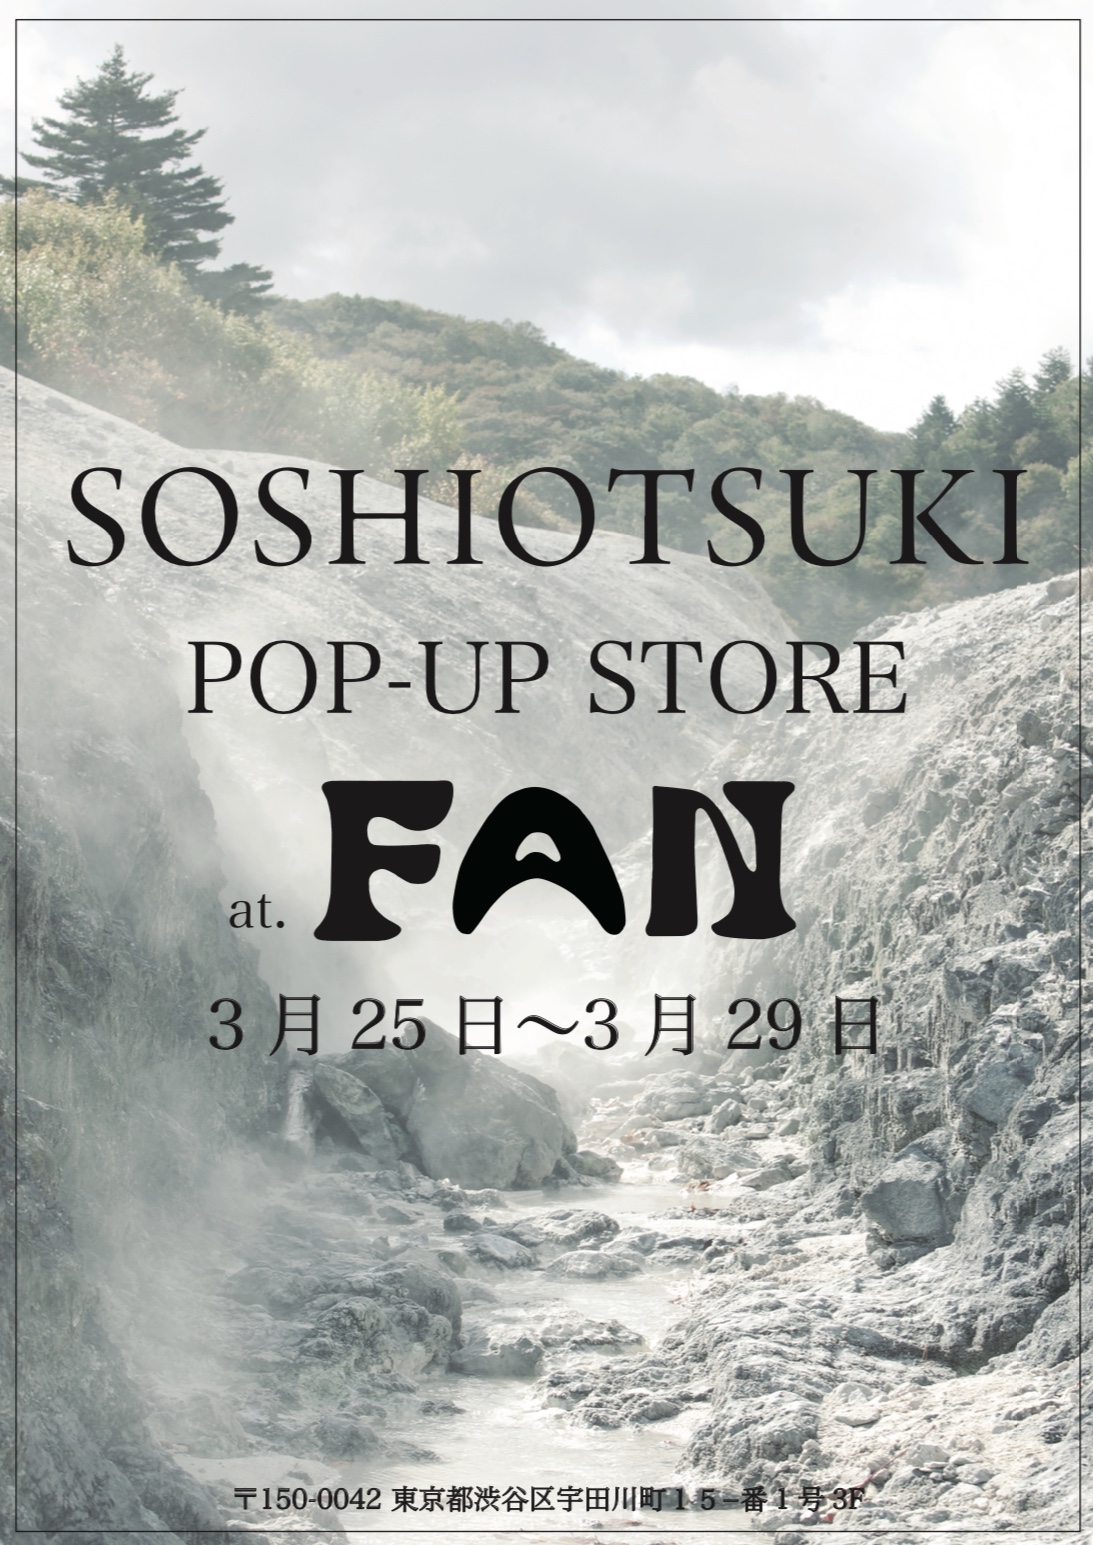 SOSHIOTSUKI POP UP STORE @ FAN